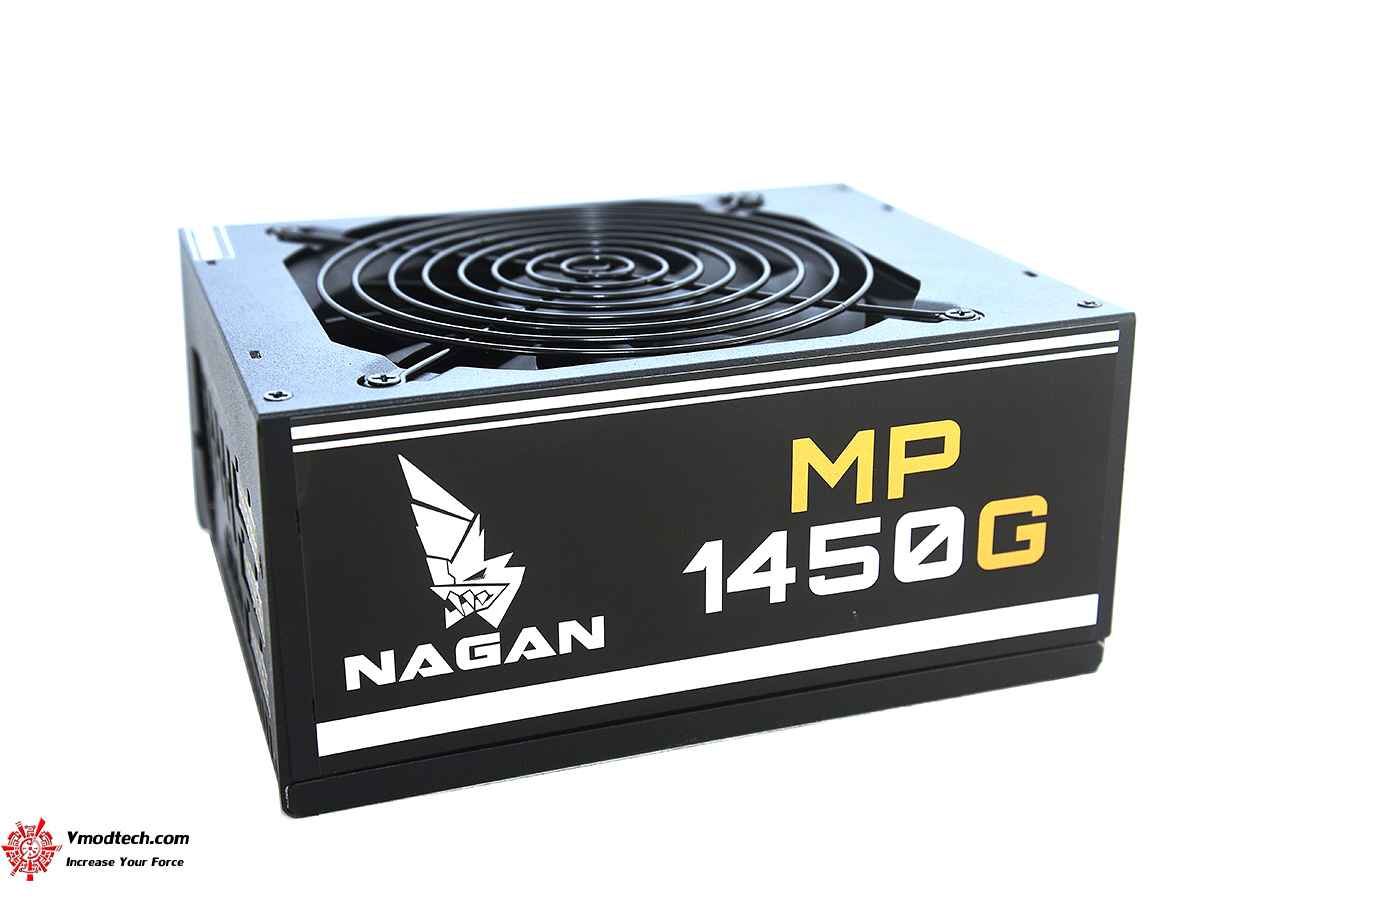 dsc 7264 NAGAN MP 1450G MINING POWER SUPPLY REVIEW